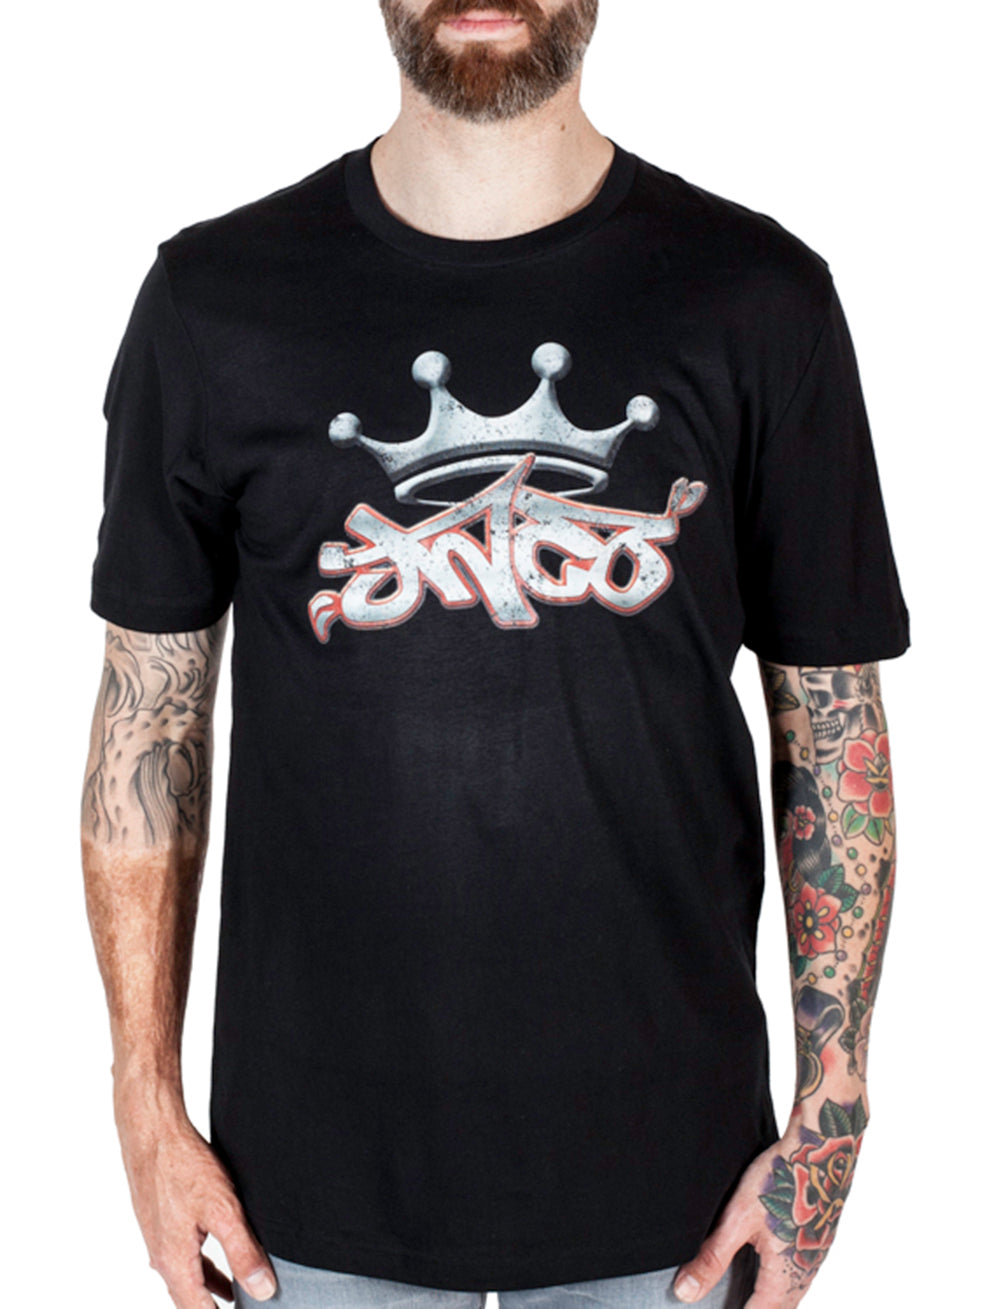 JNCO Clothing - Patch Mens JNCO T-Shirt (Black)